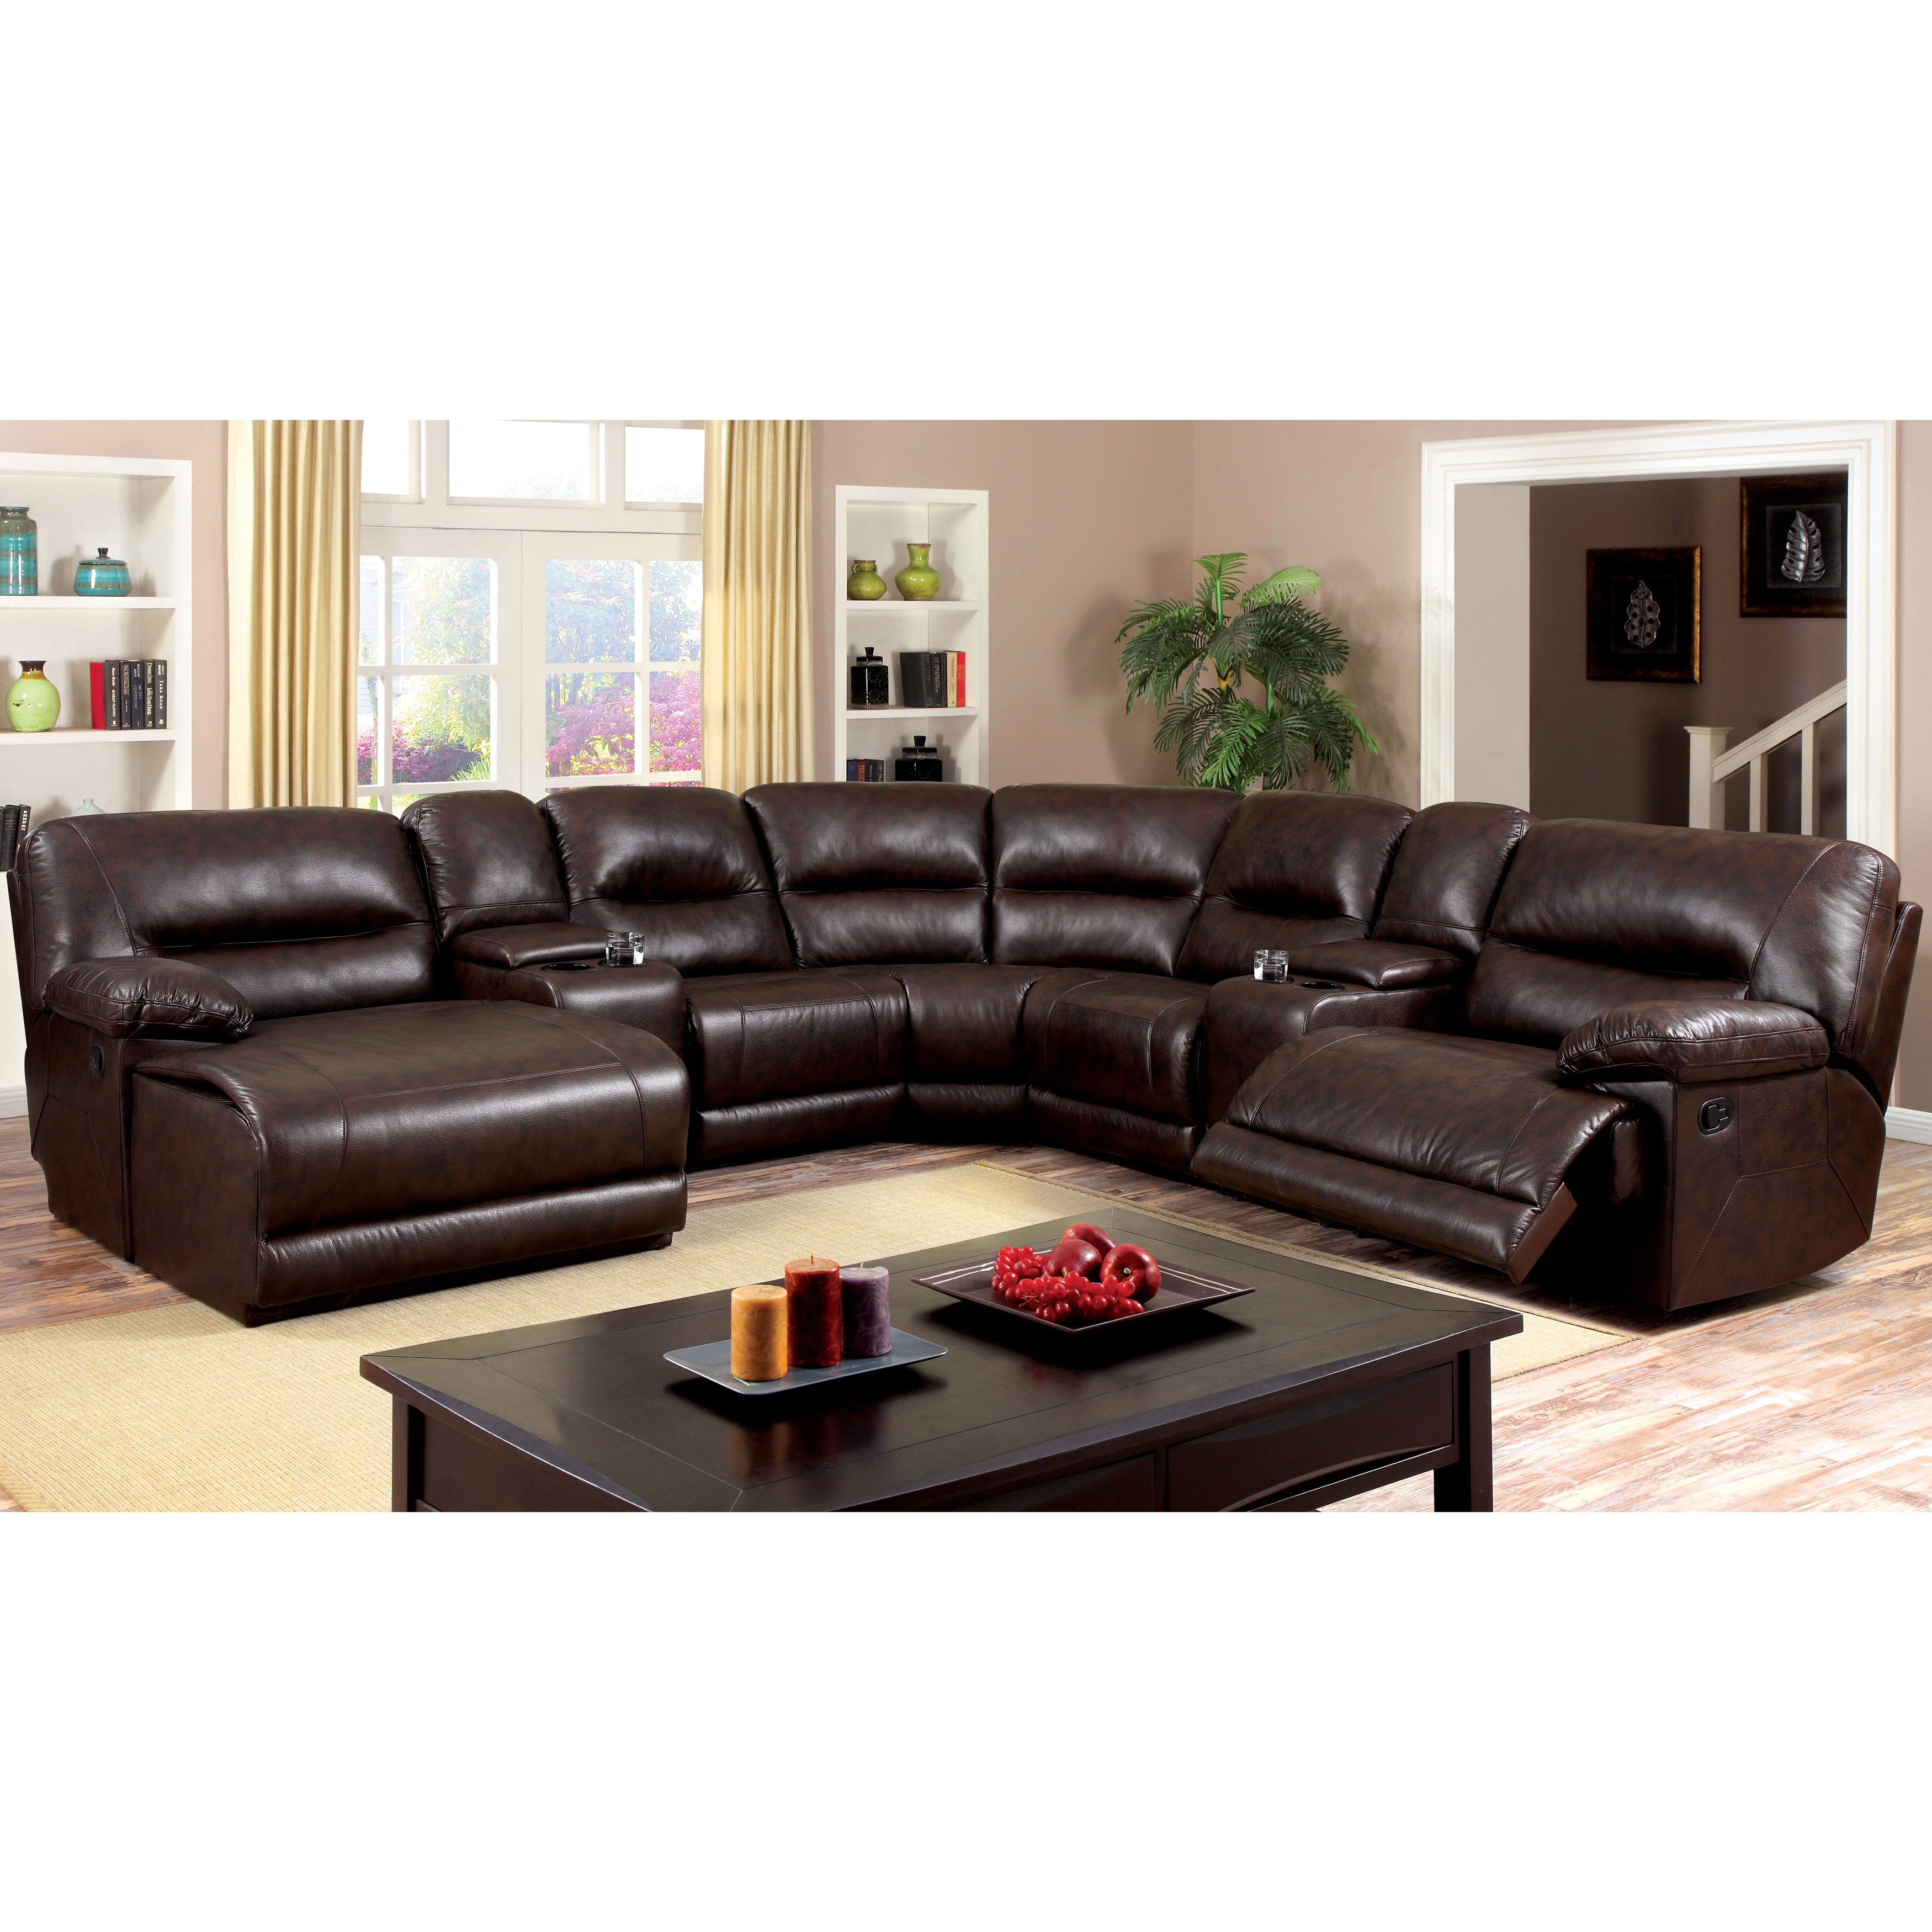 Sectional Sofa Living Room Furniture Find Great Furniture Deals